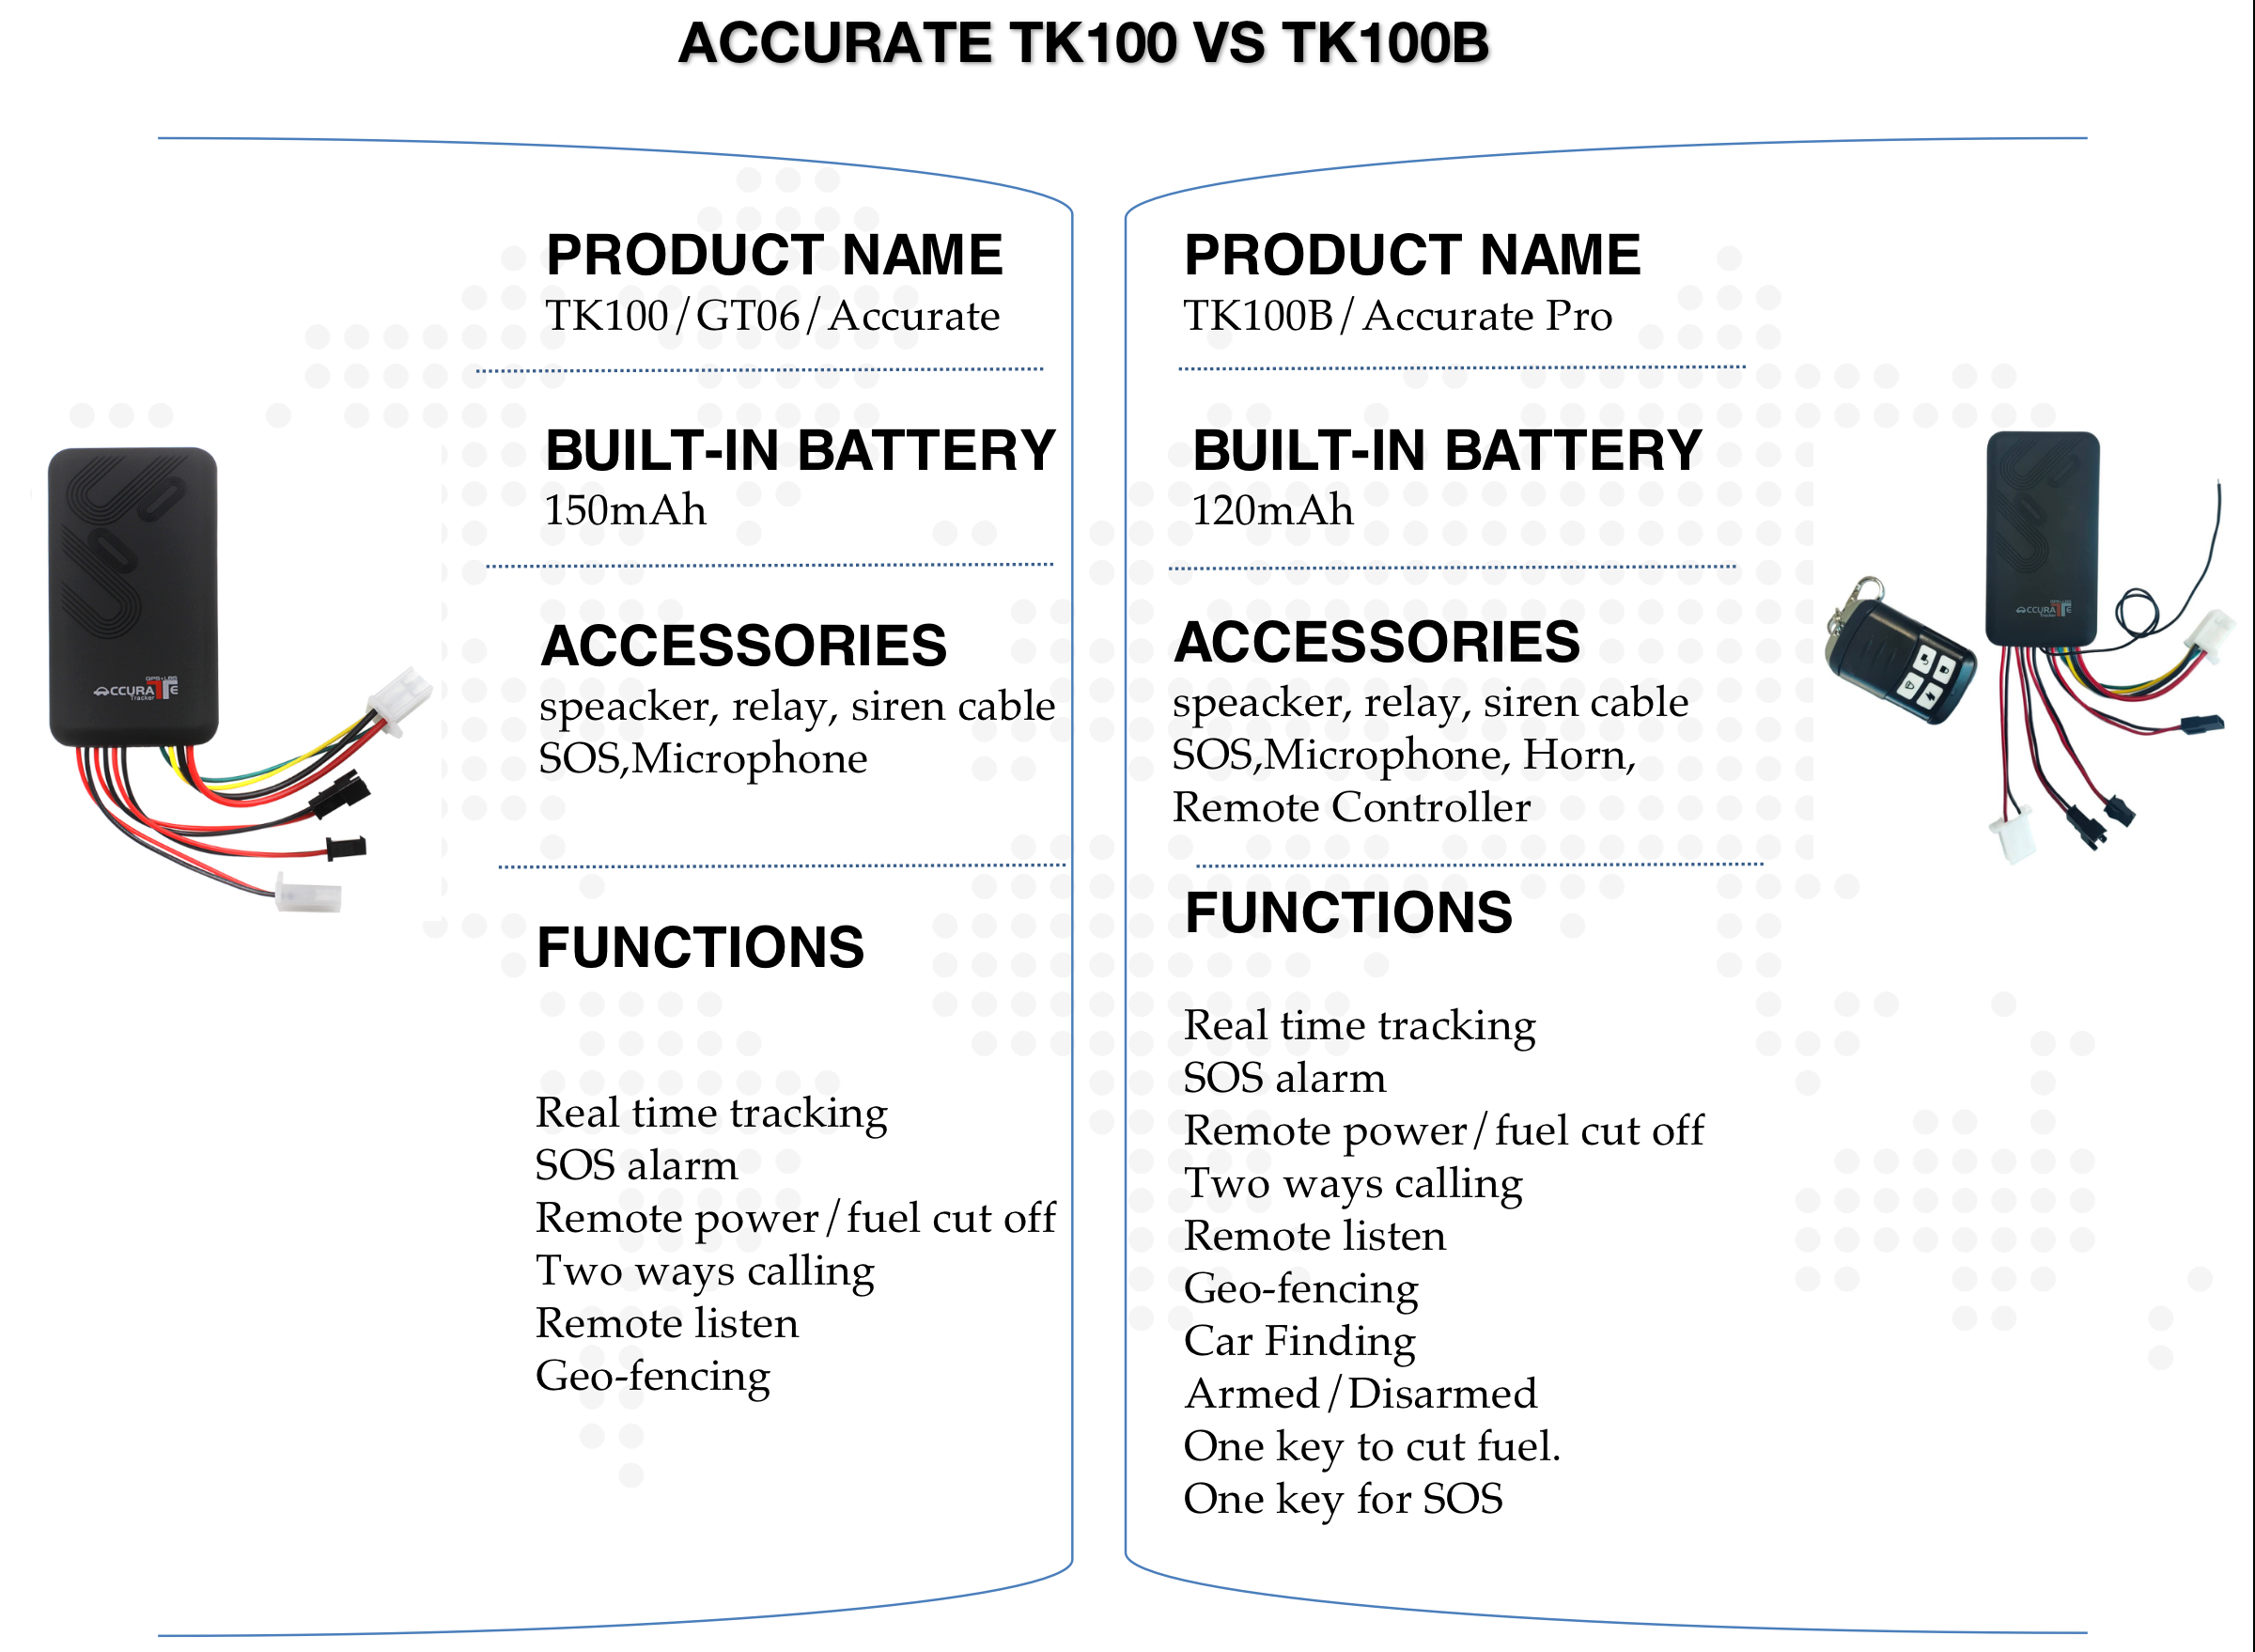 TK100B- Accurate Pro version GT06/TK100 